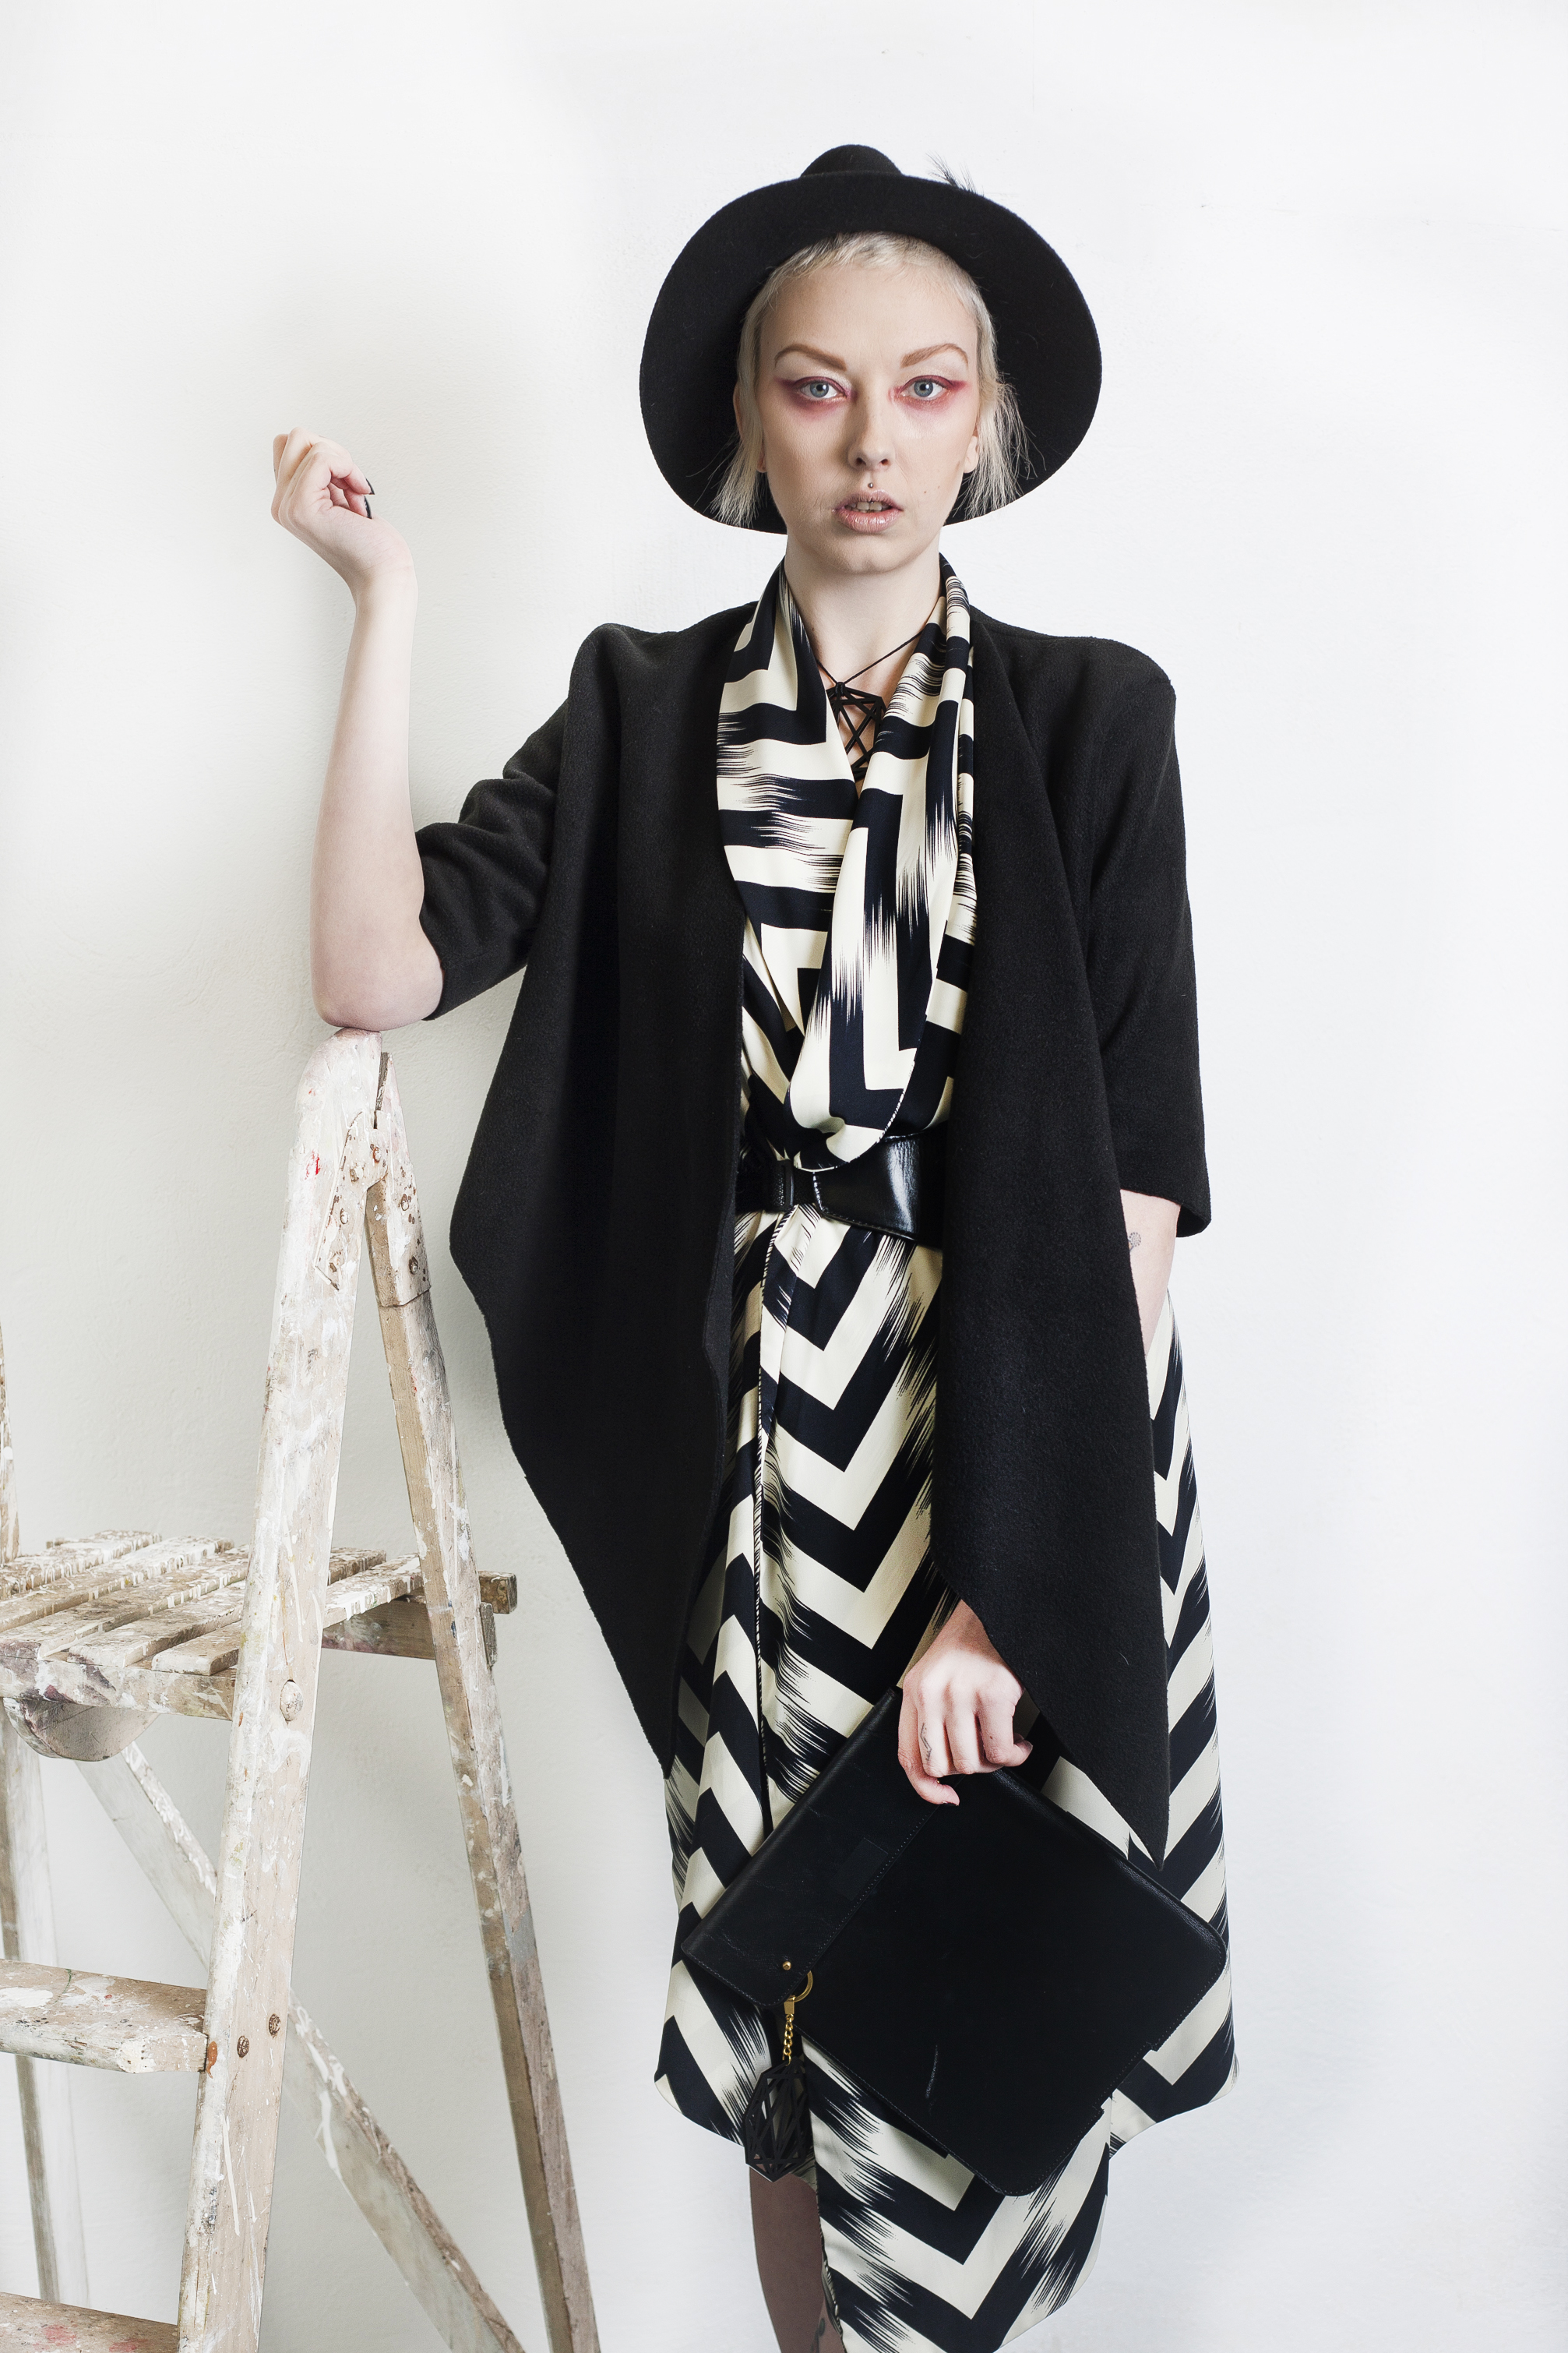 zaramia-ava-zaramiaava-leeds-fashion-designer-ethical-sustainable-tailored-minimalist-editorial-print-black-belt-dress-versatile-drape-cowl-styling-studio-womenswear-models-photoshoot-black-white-jacket-hat-monochrome-2.jpg